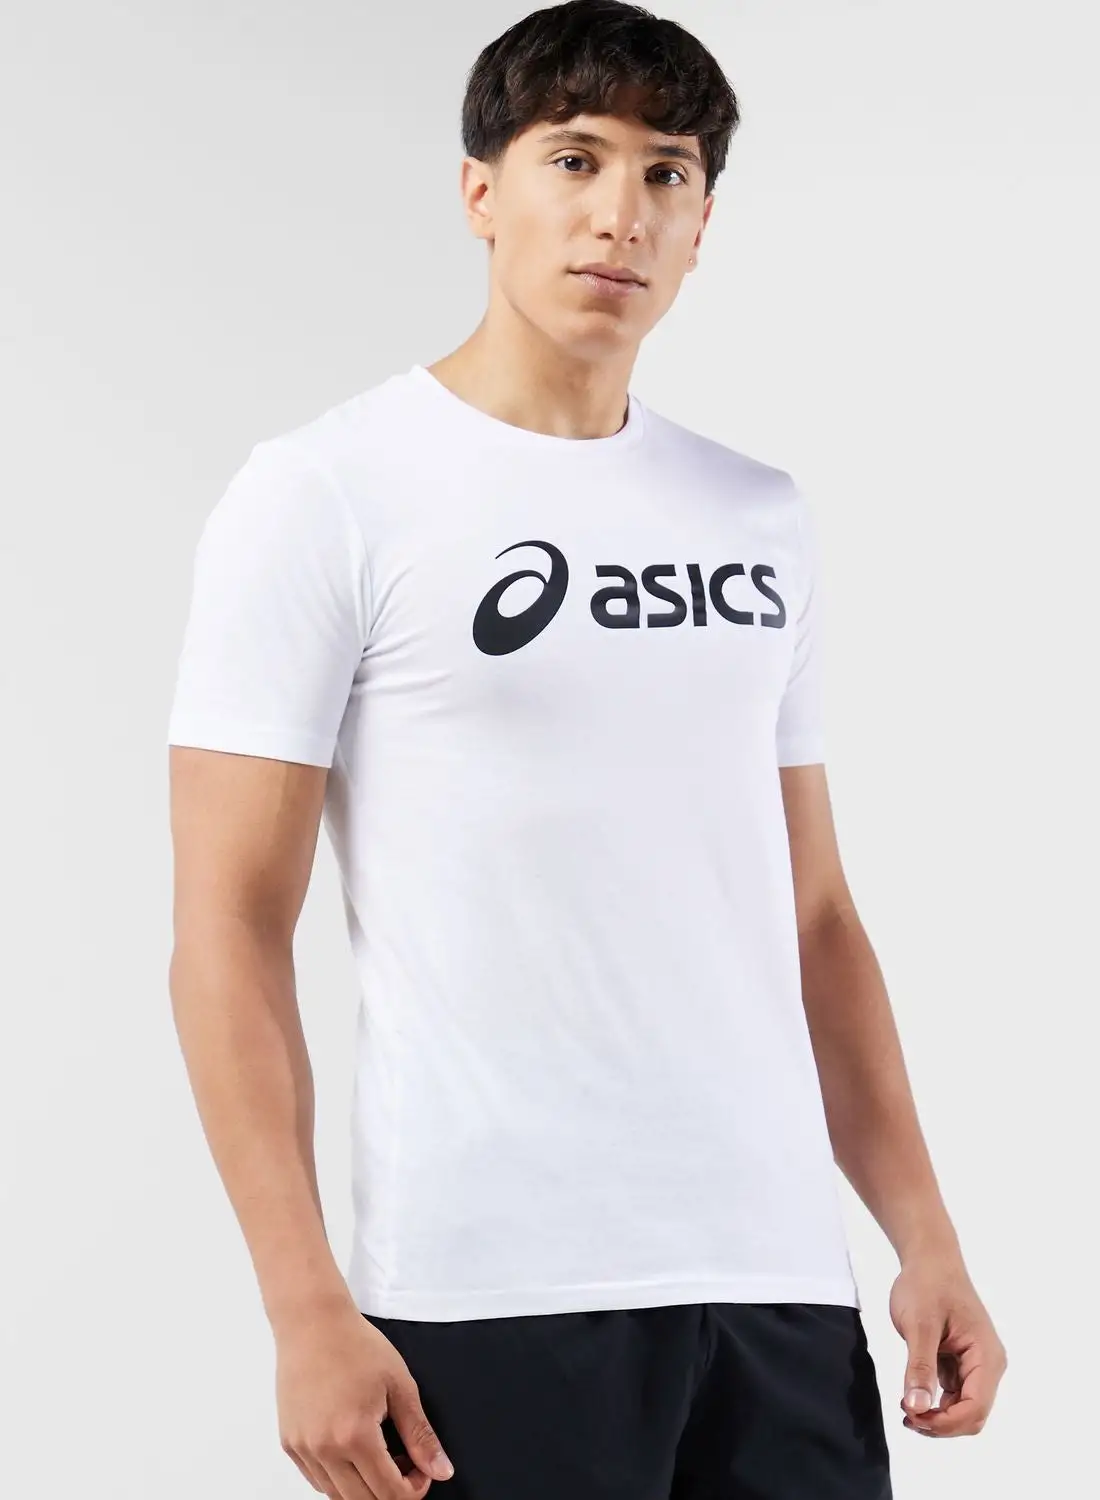 asics Logo T-Shirt